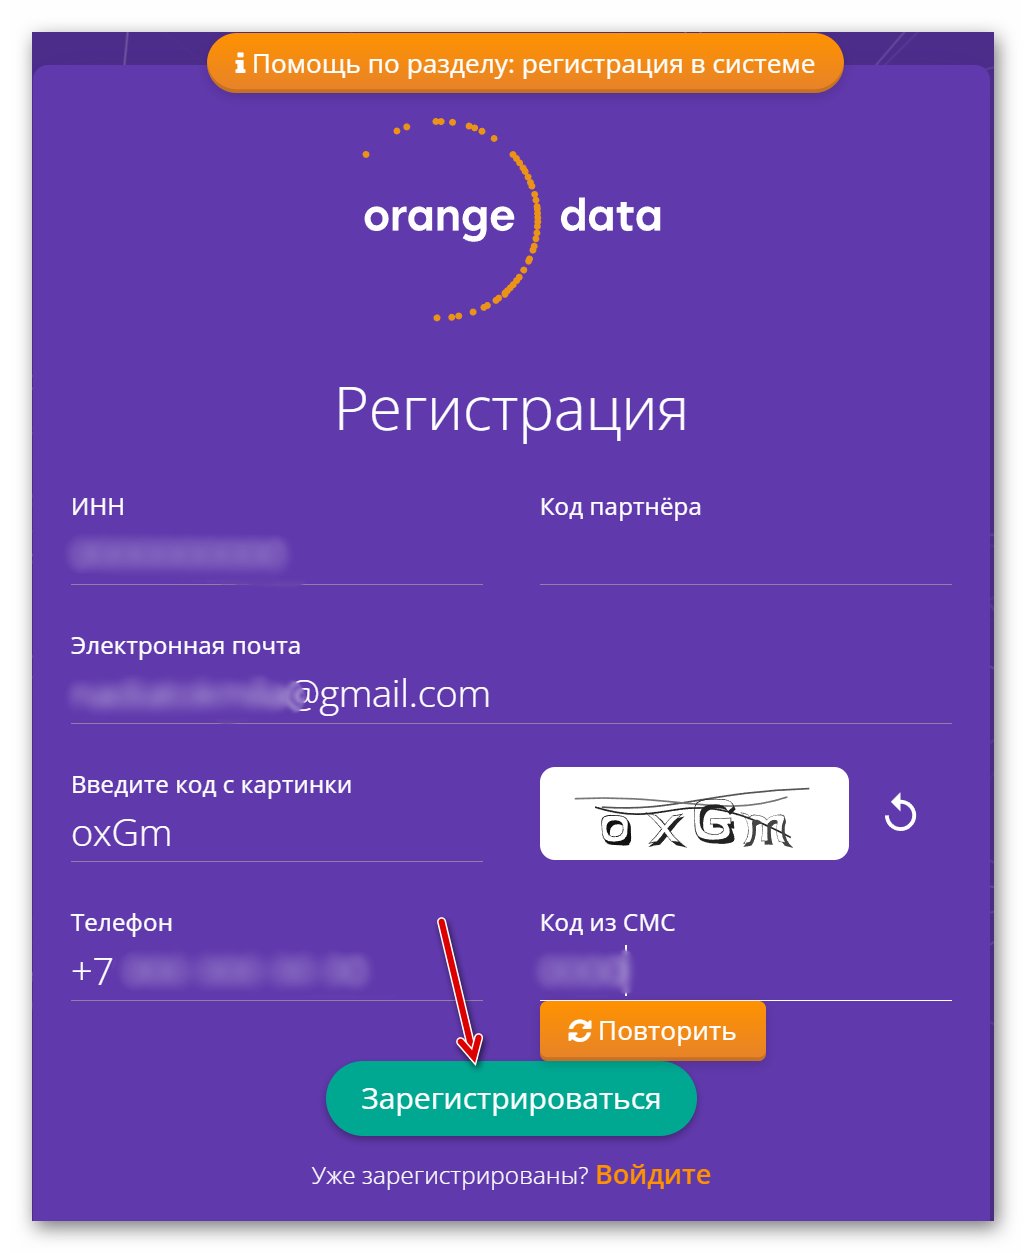 orangedata_05.png